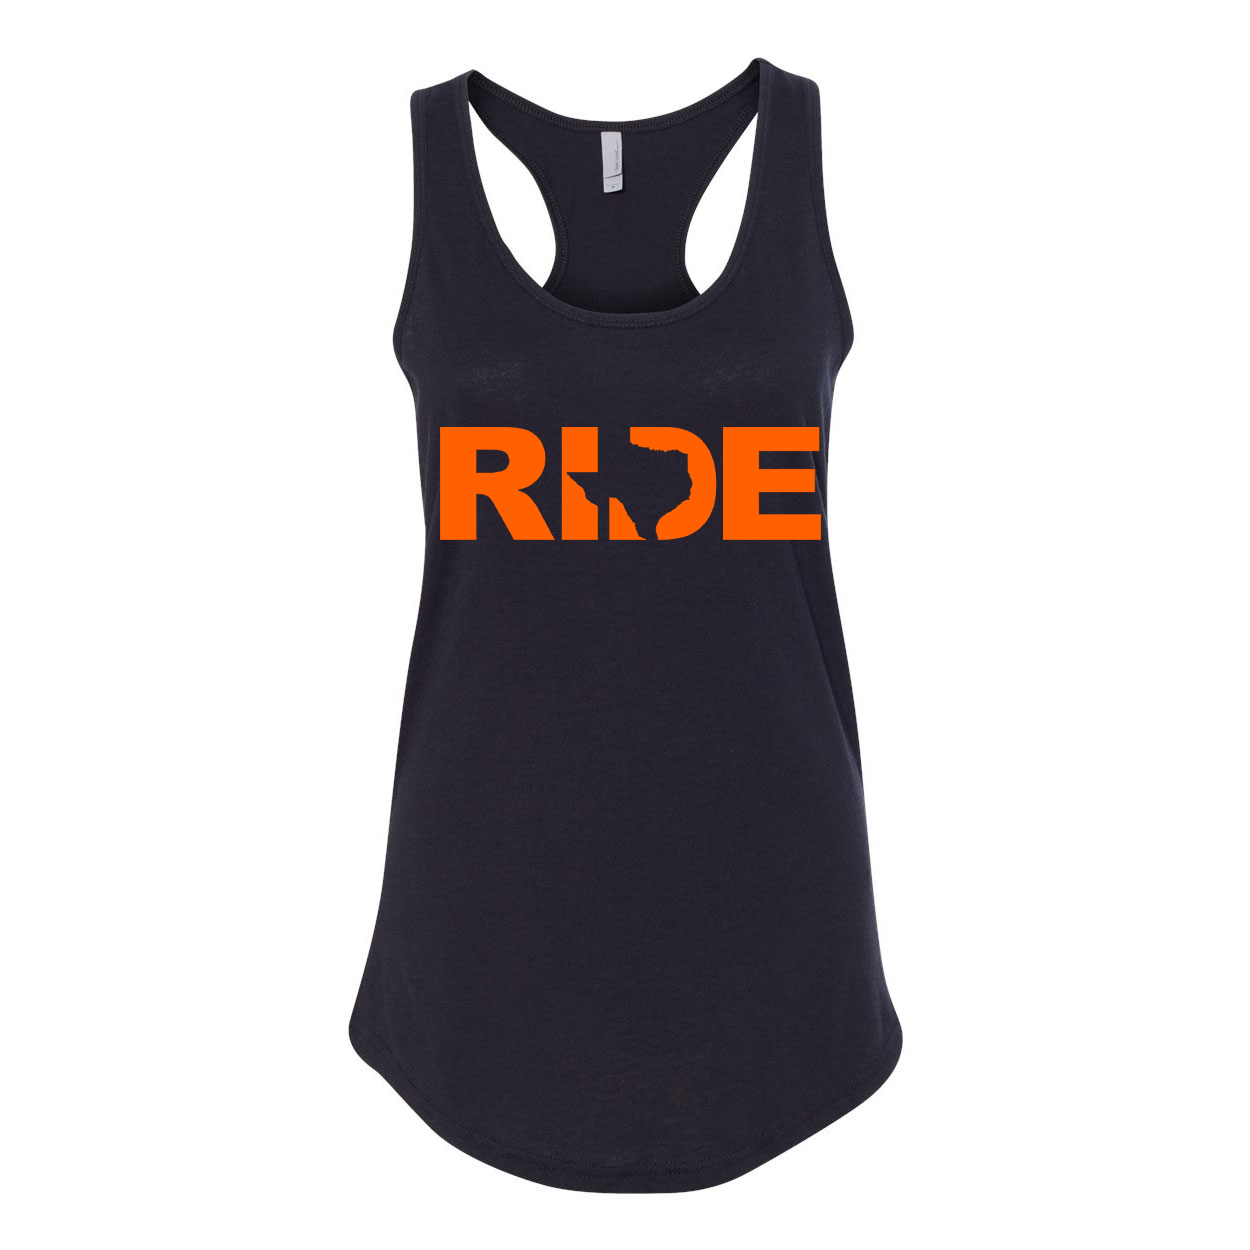 Ride Texas Classic Women's Racerback Tank Top Black (Orange Logo)